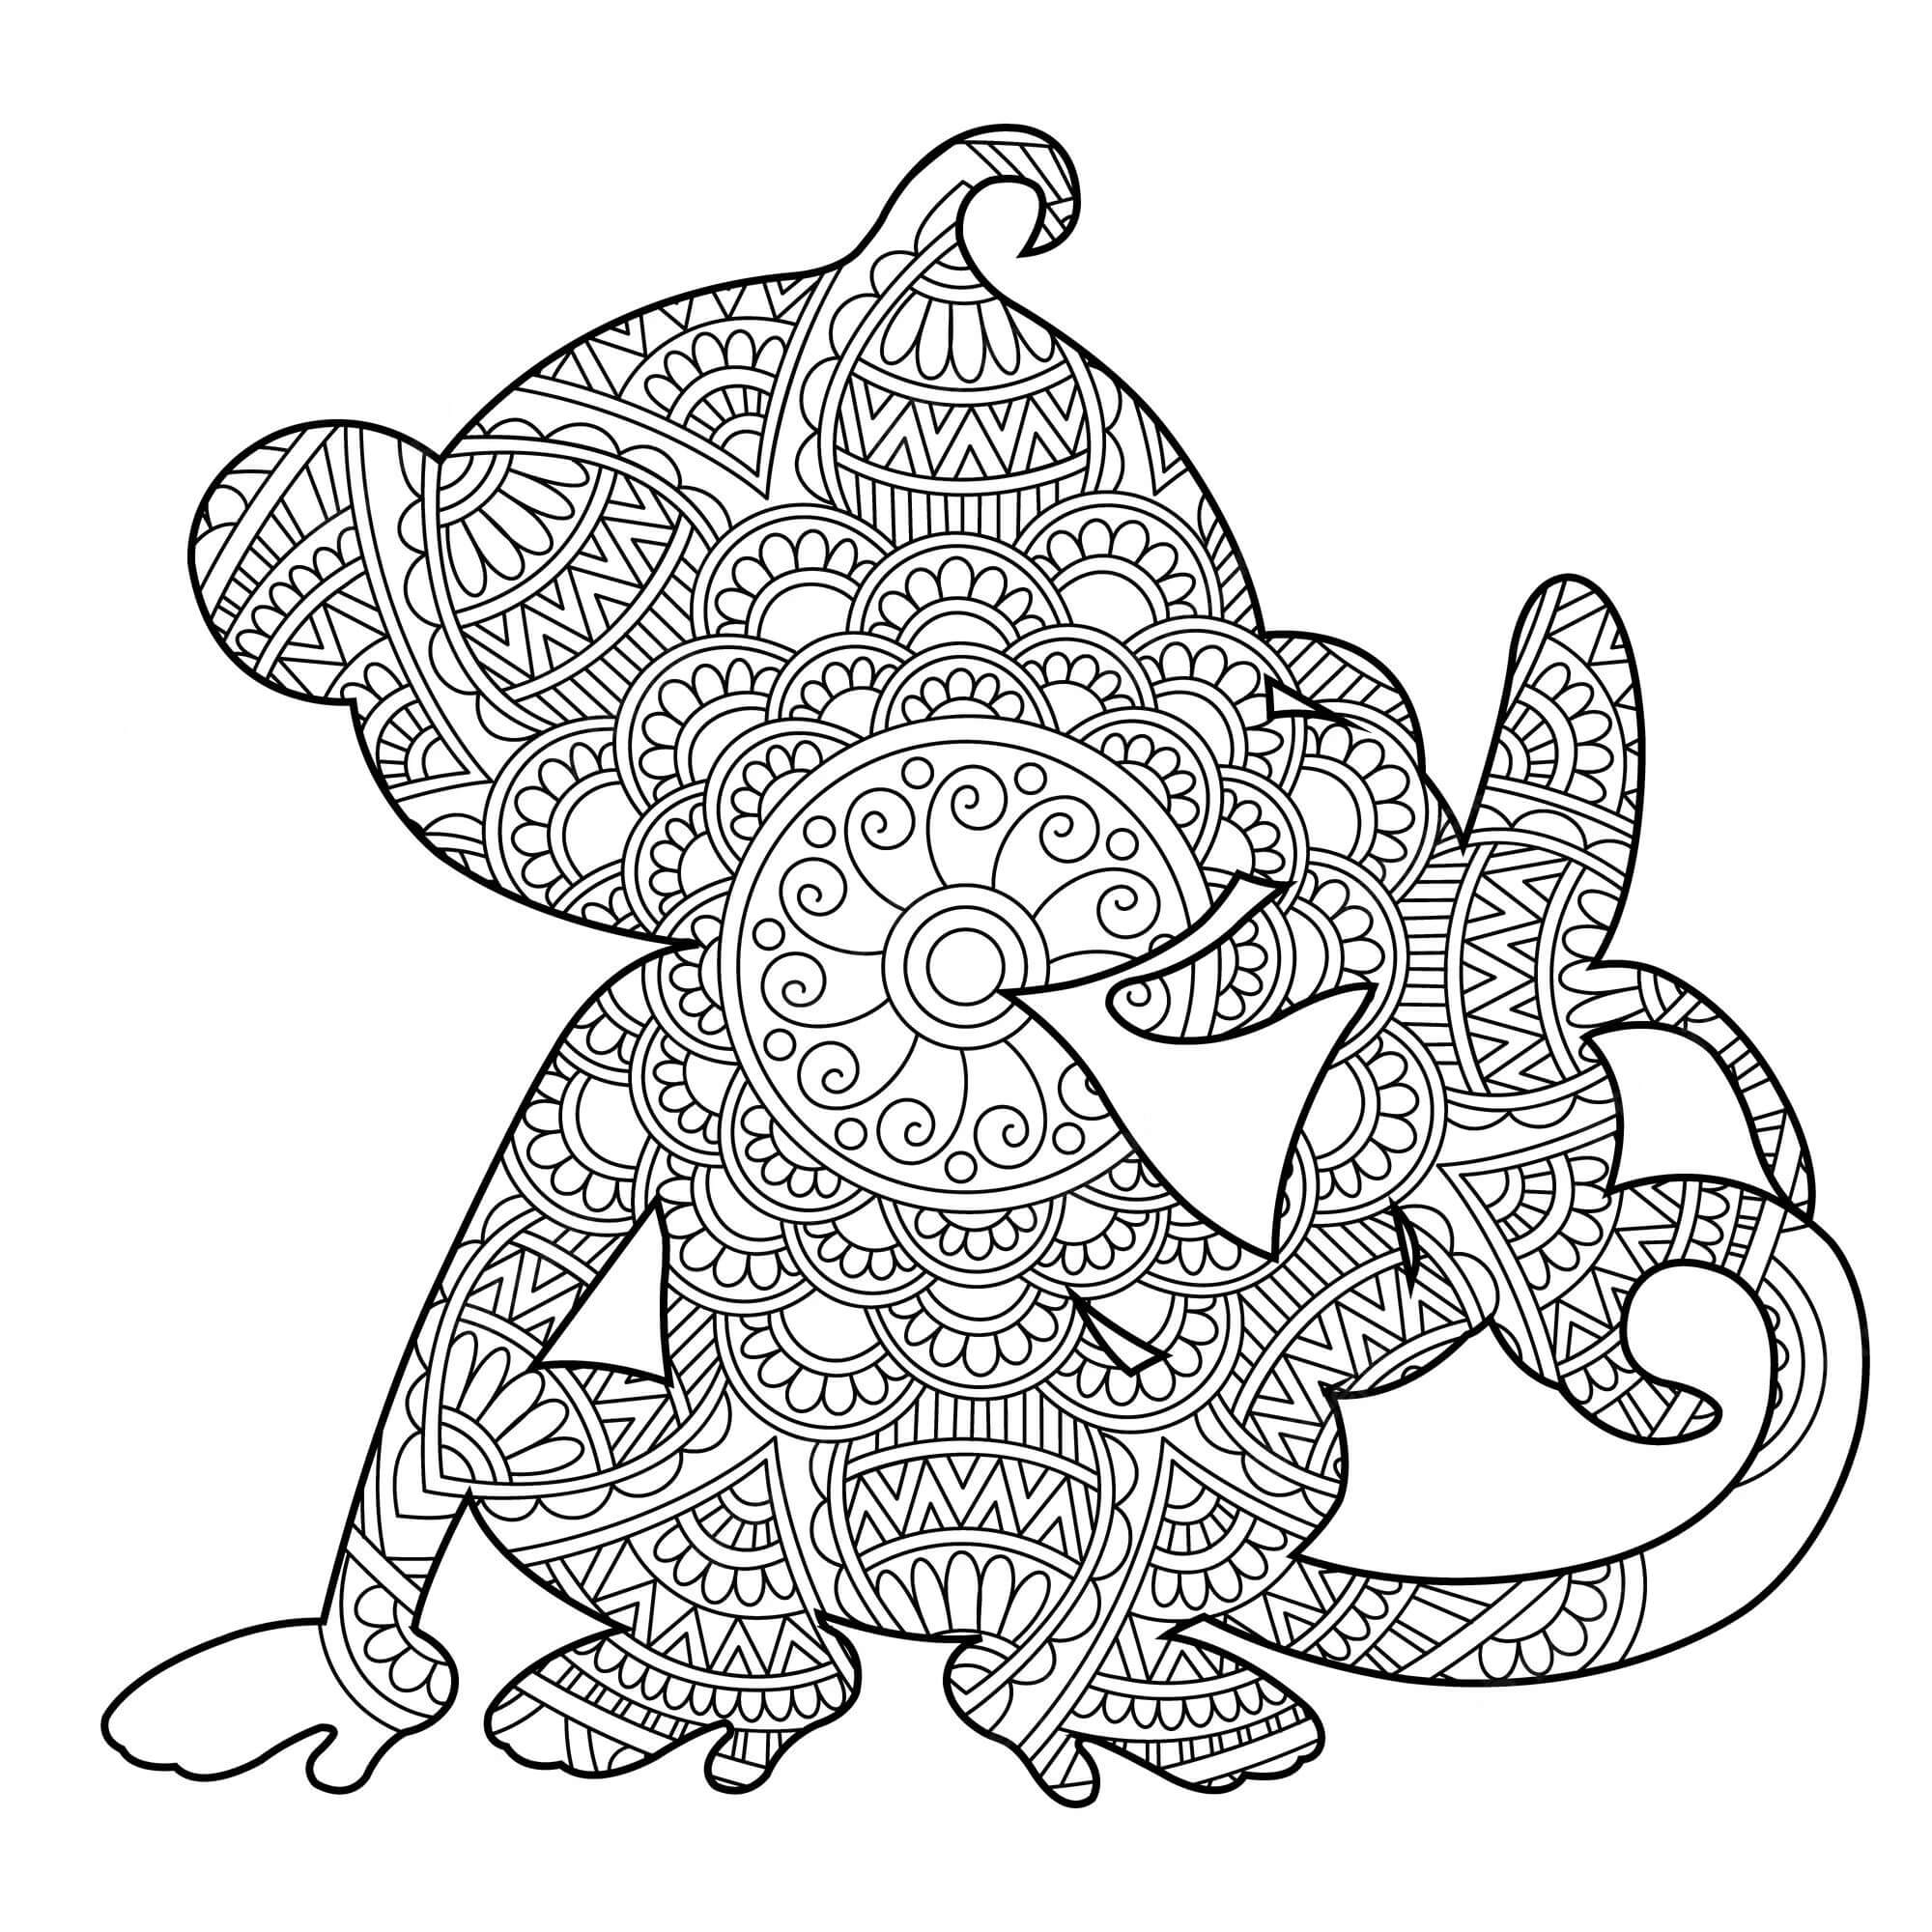 Mandala Monkey Coloring Page - Sheet 4 Mandalas